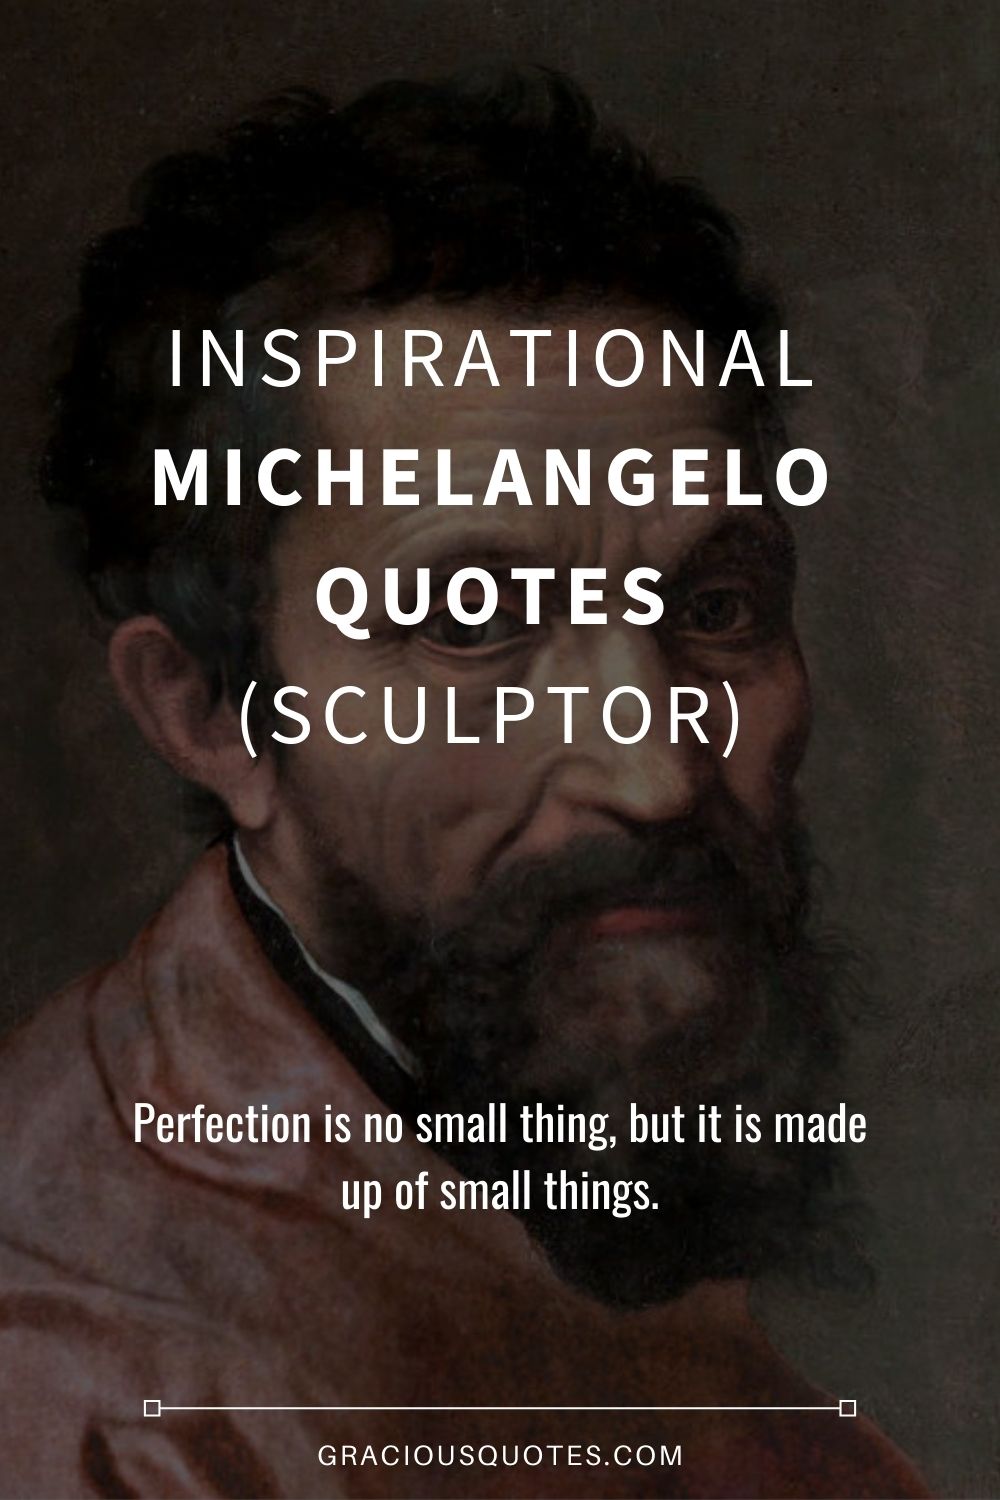 Inspirational Michelangelo Quotes (SCULPTOR) - Gracious Quotes